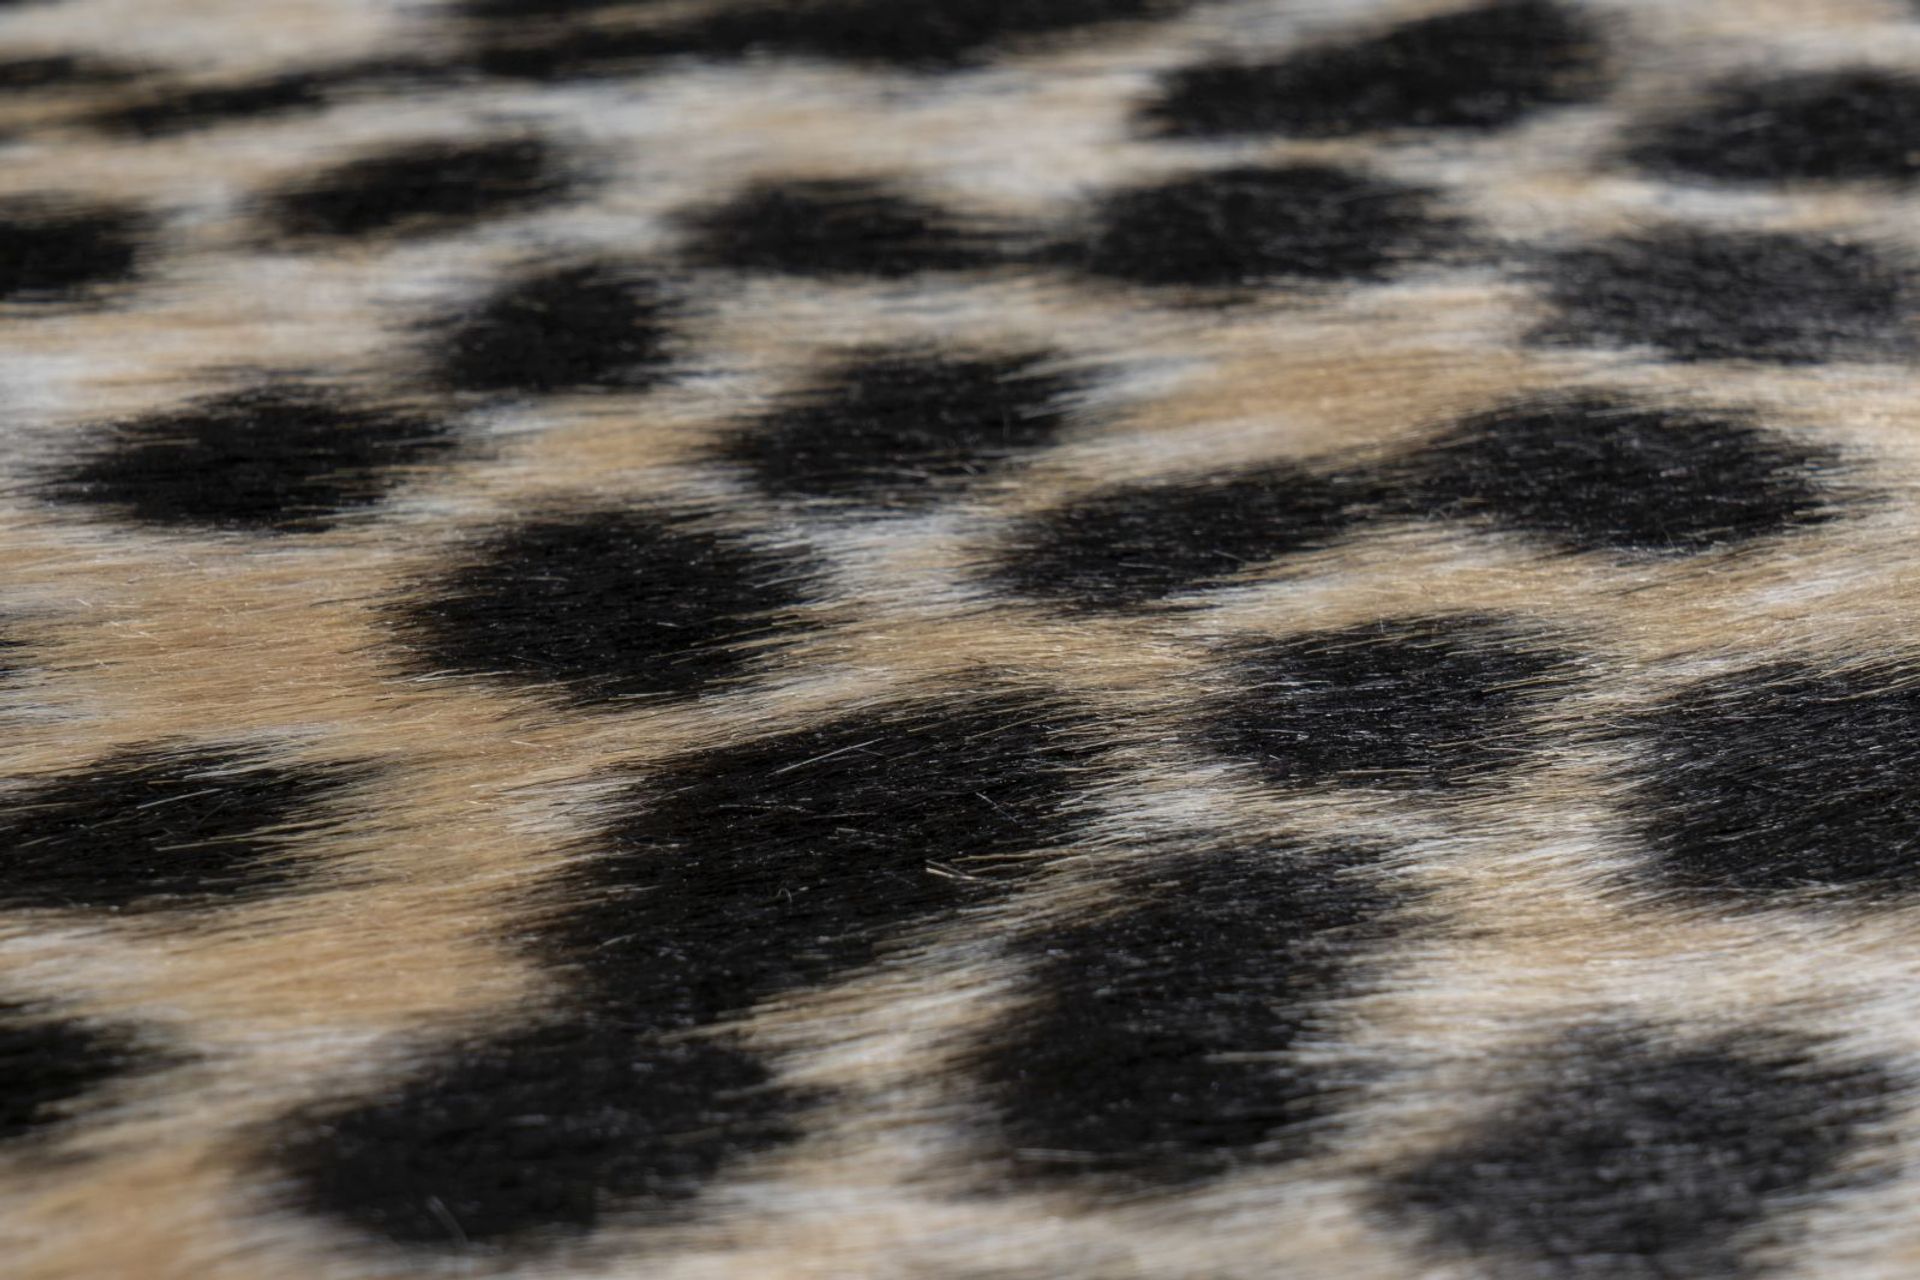 Teppich Philippines - Manila Cheetah 150 cm x 200 cm